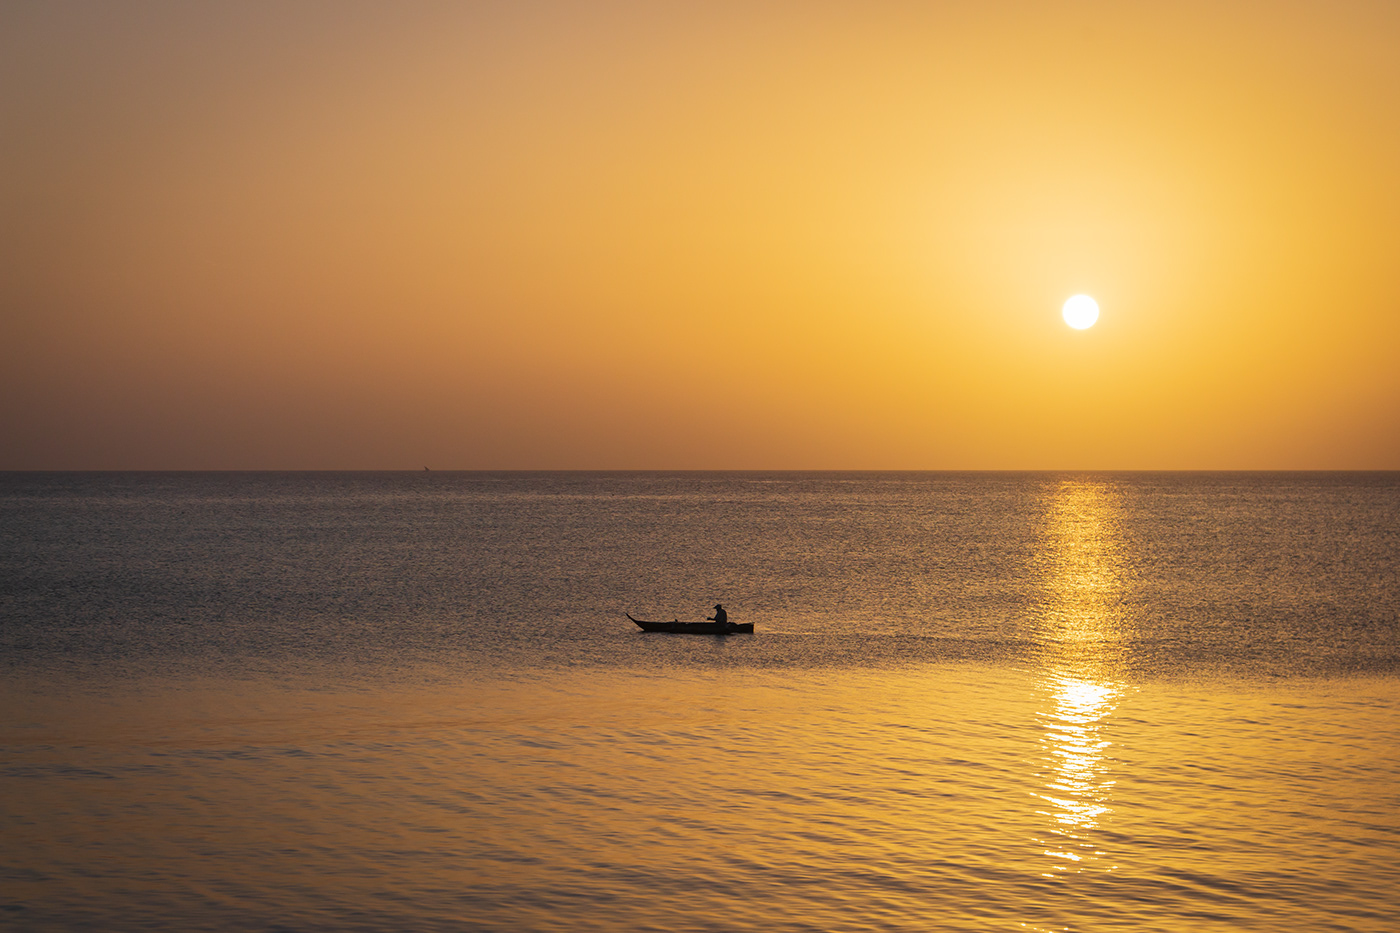 Landscape seascape Tanzania Fisherman boat sunset Evening horizon tranquility zanzibar